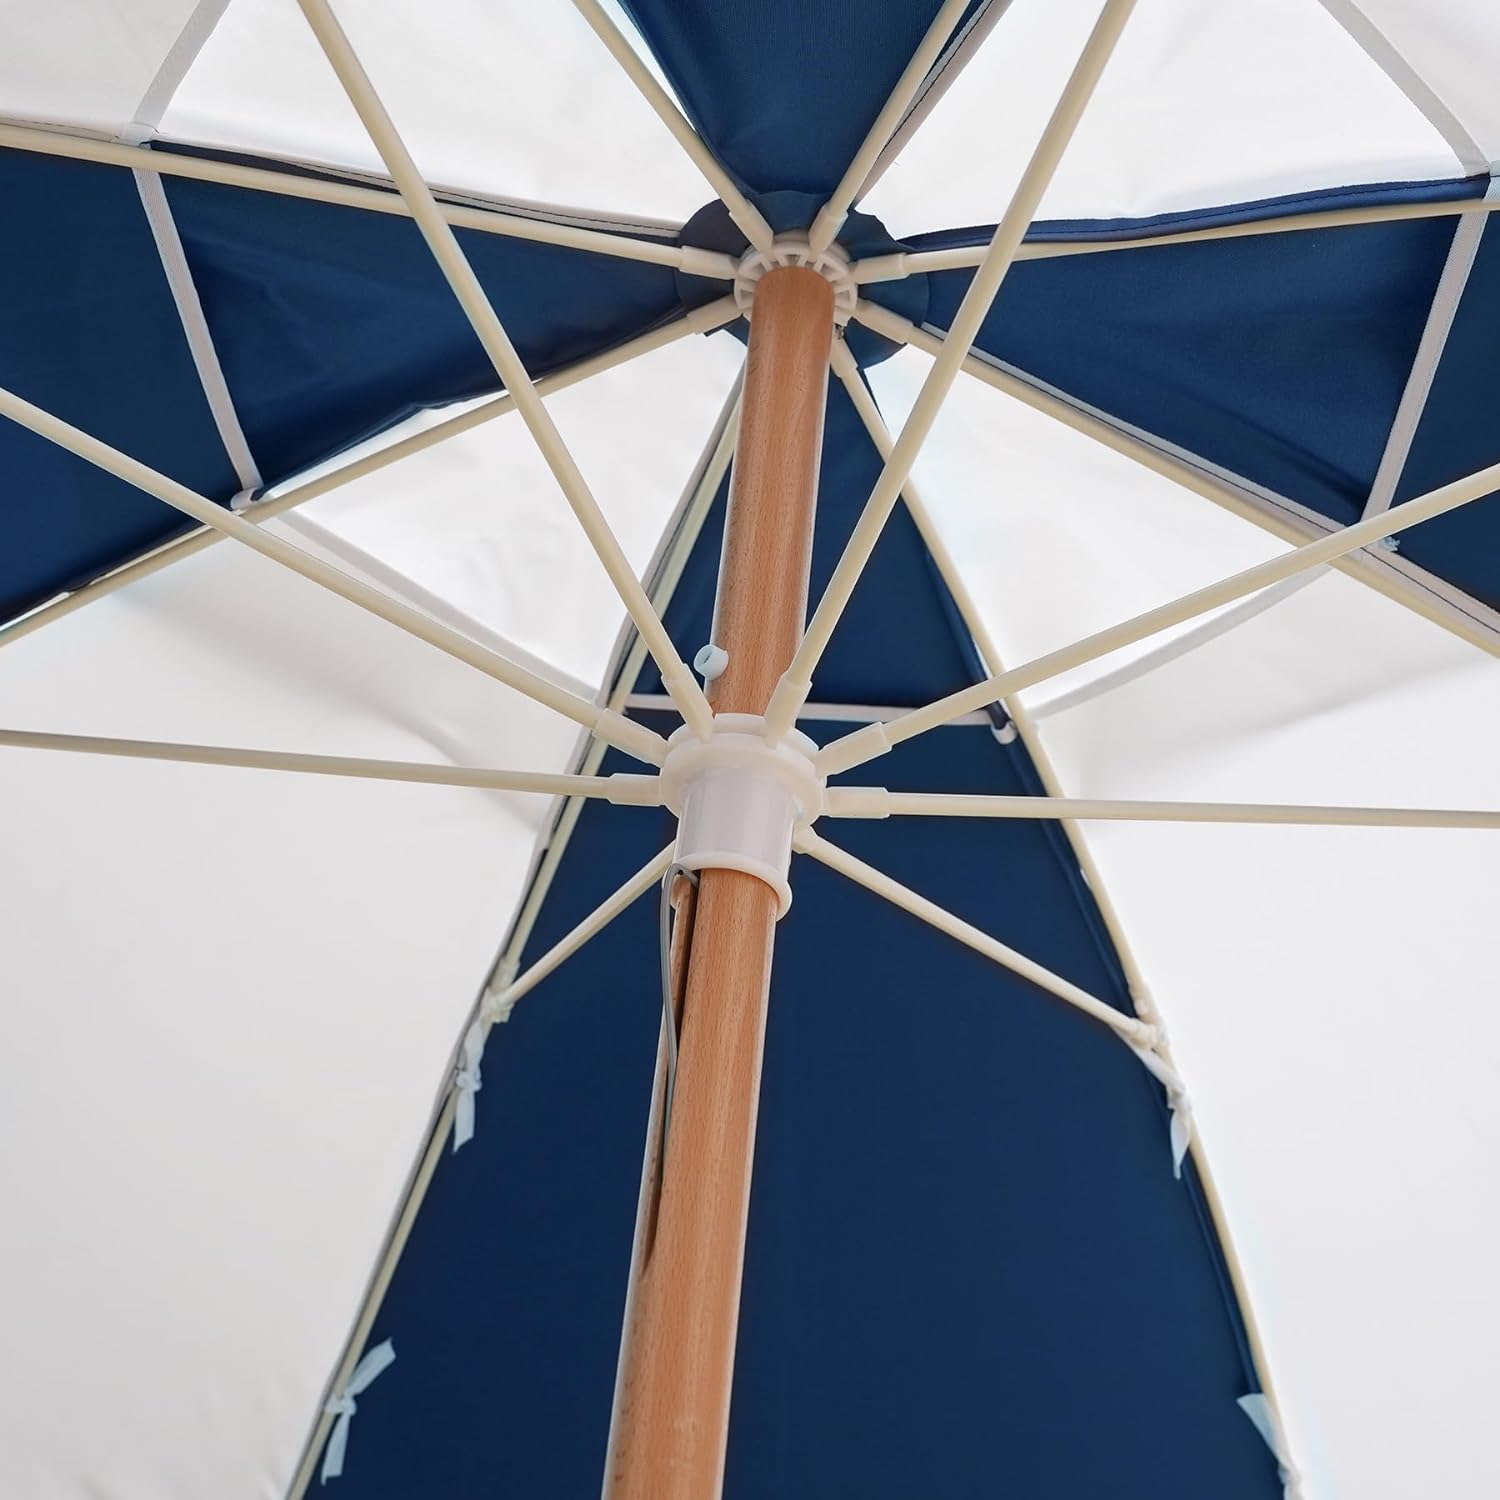 AMMSUN 7.5ft Commercial Grade Beach Umbrella Dark Blue/White